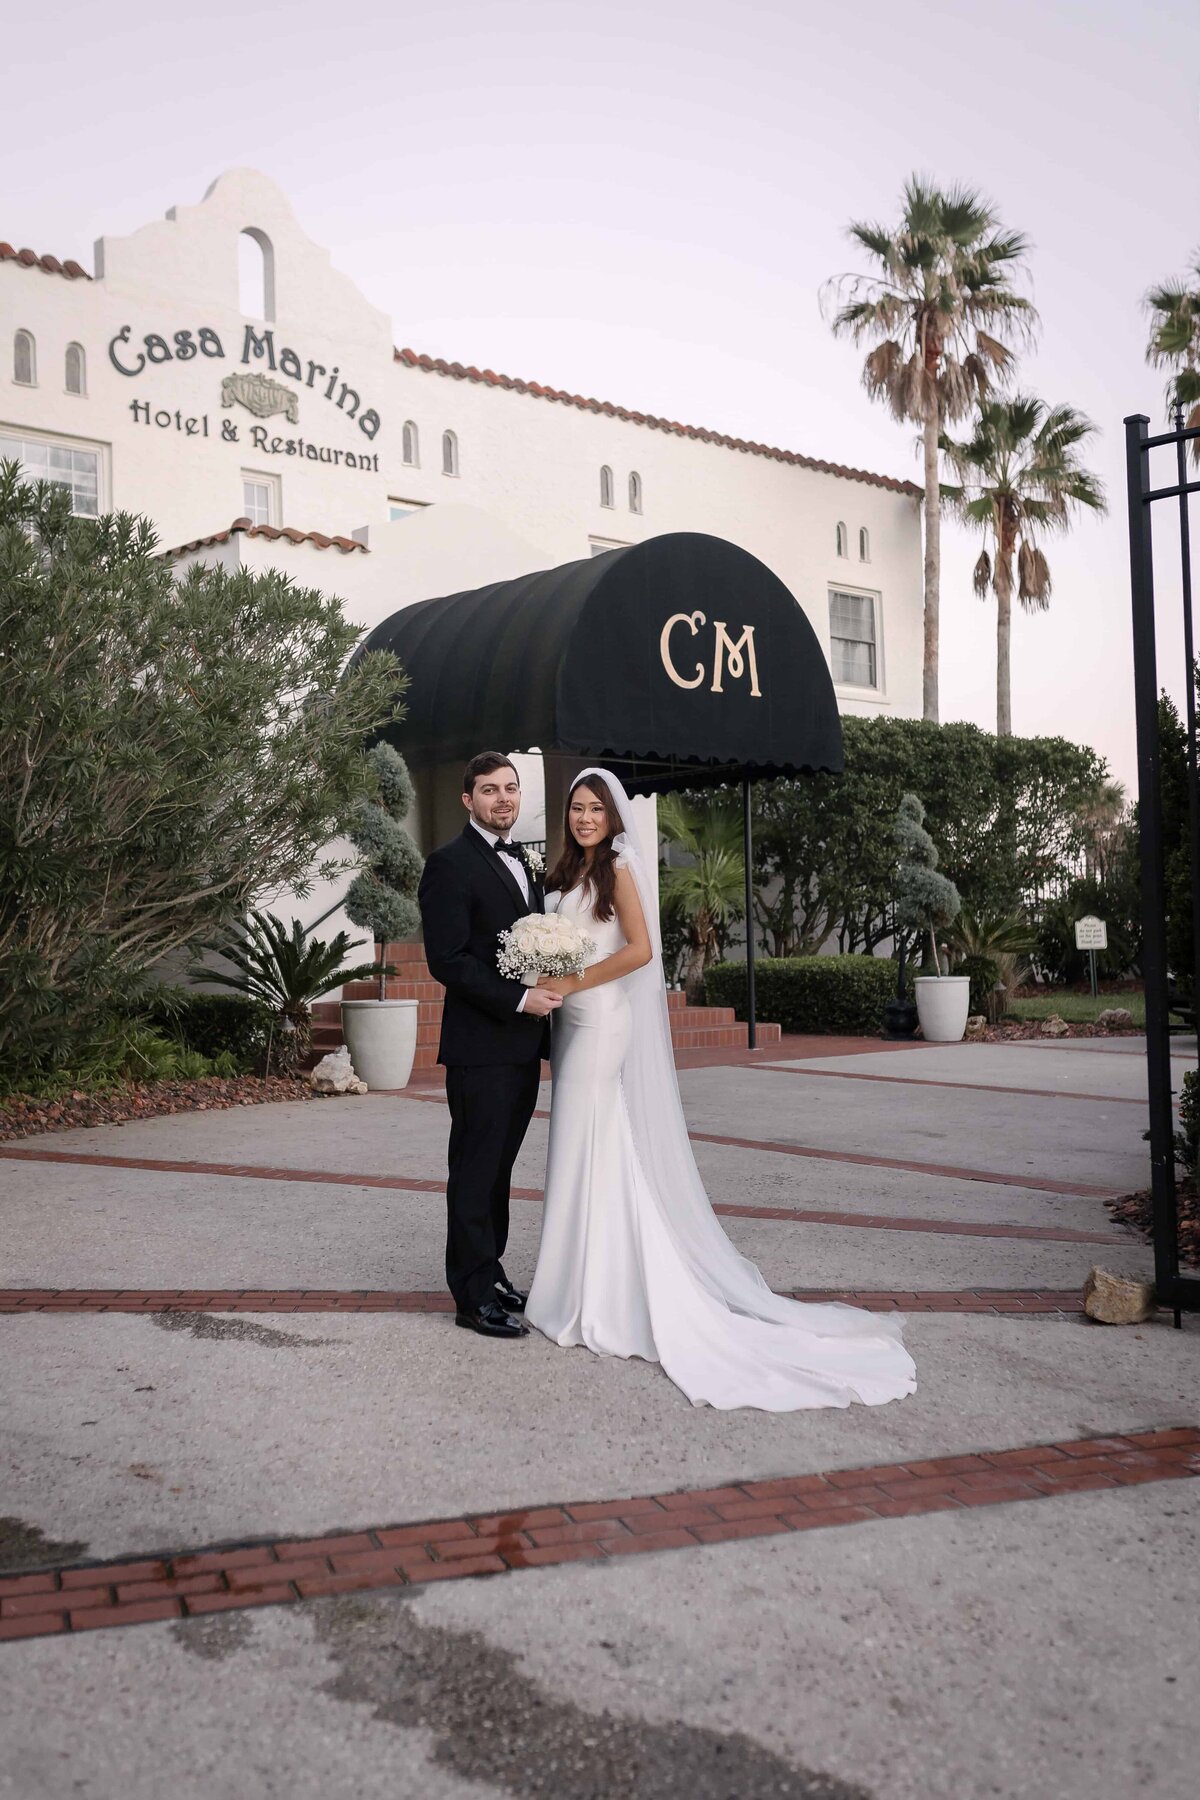 Casa Marina Wedding Photos, Jacksonville Florida | Jacksonville Wedding Photography - Phavy Photography